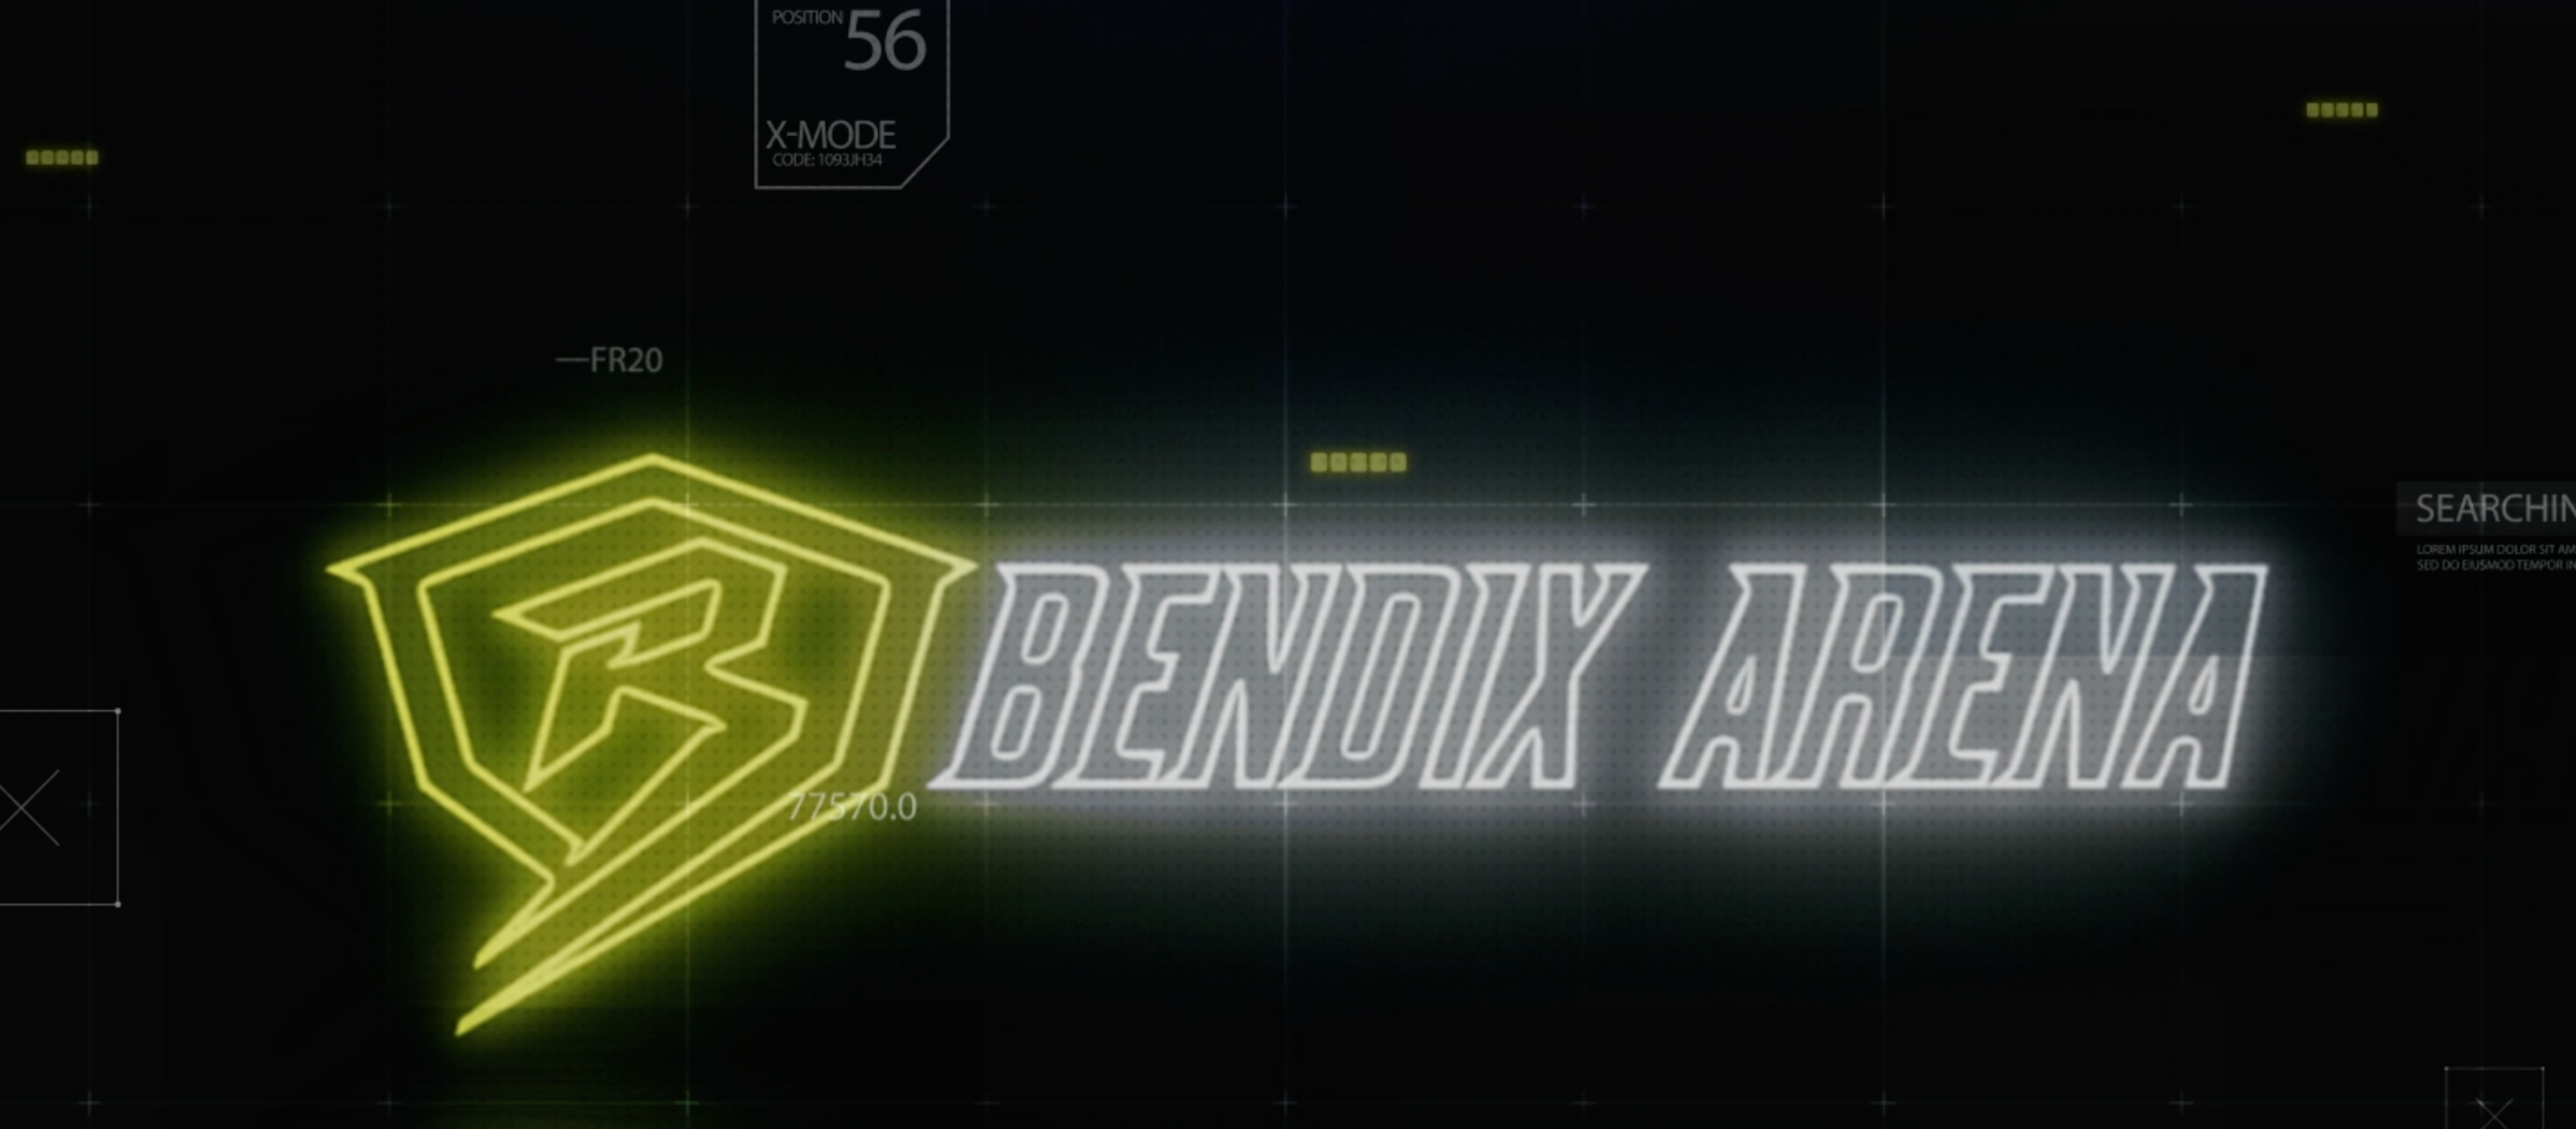 Bendix Arena Print Cell Phone laptop Mockup branding